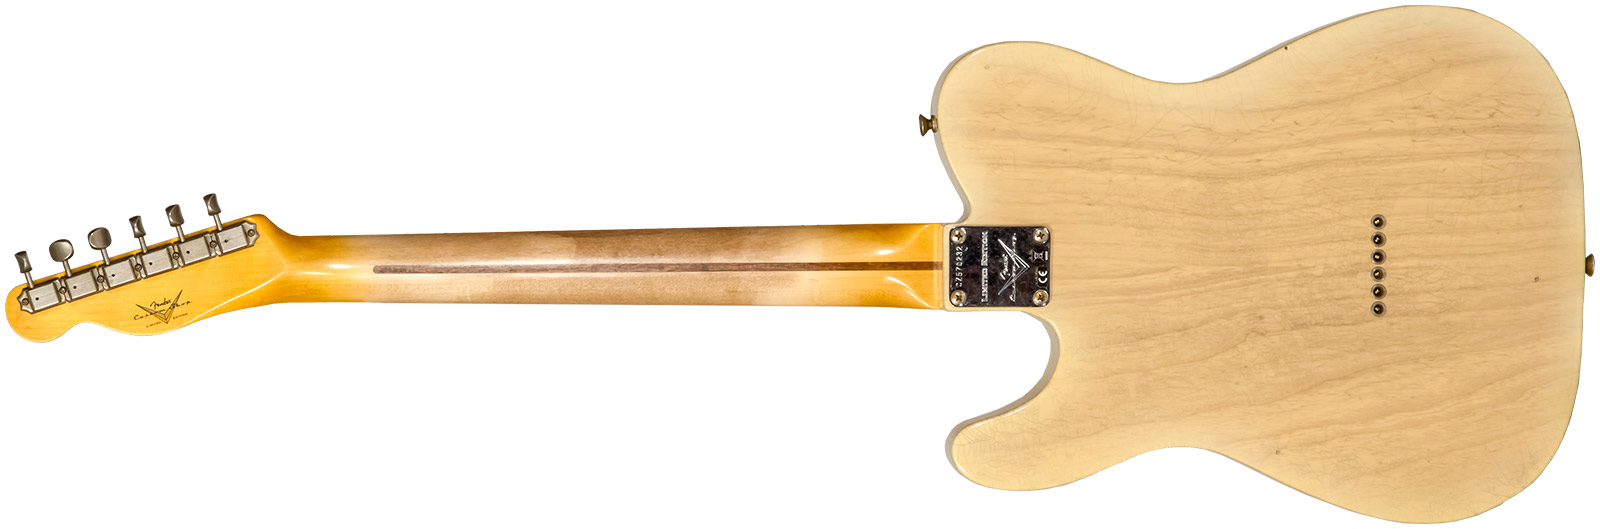 Fender Custom Shop Tele 1955 2s Ht Mn #cz570232 - Journeyman Relic Natural Blonde - Televorm elektrische gitaar - Variation 1